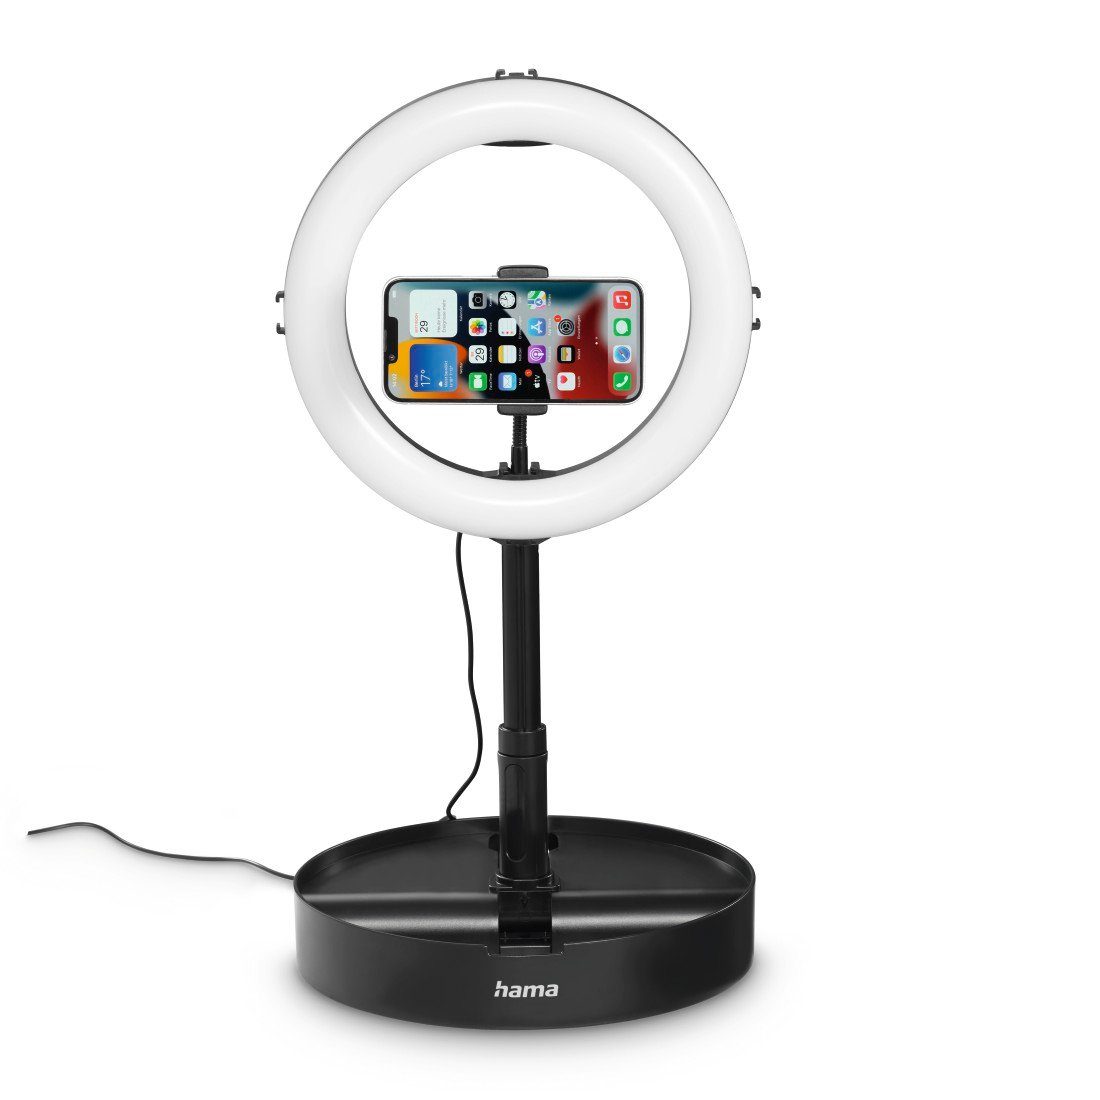 Hama Ringlicht LED Ringleuchte für mit Webcam, Handy, Stativ Videokonferenz Mikrofon